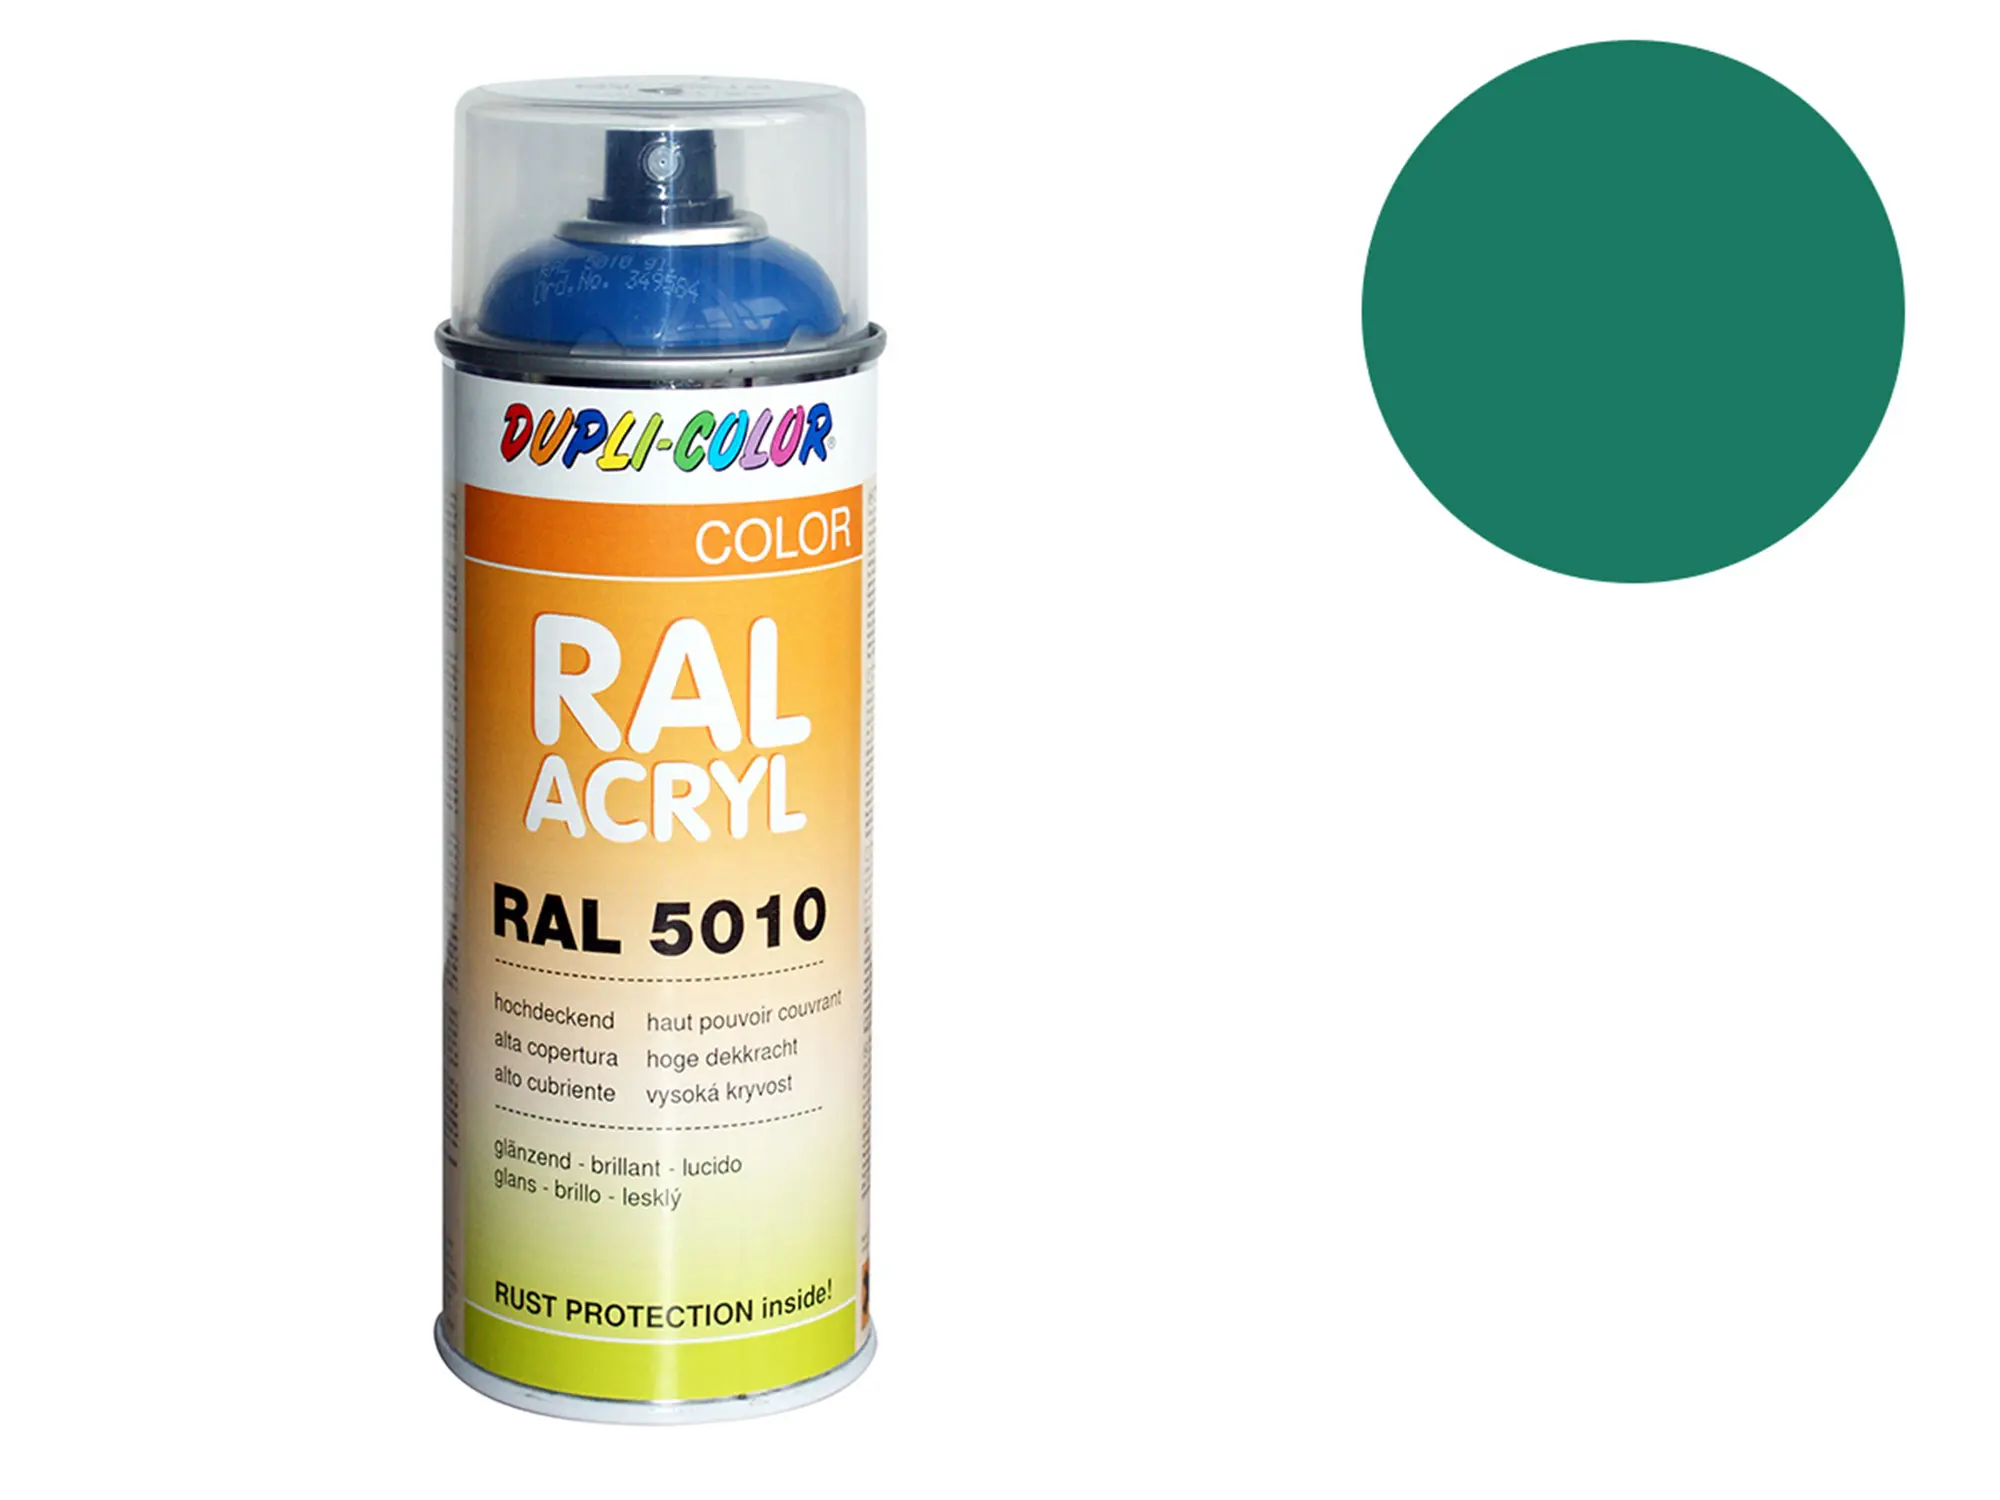 Dupli-Color Acryl-Spray RAL 5021 wasserblau, glänzend - 400 ml, Art.-Nr.: 10064805 - Bild 1